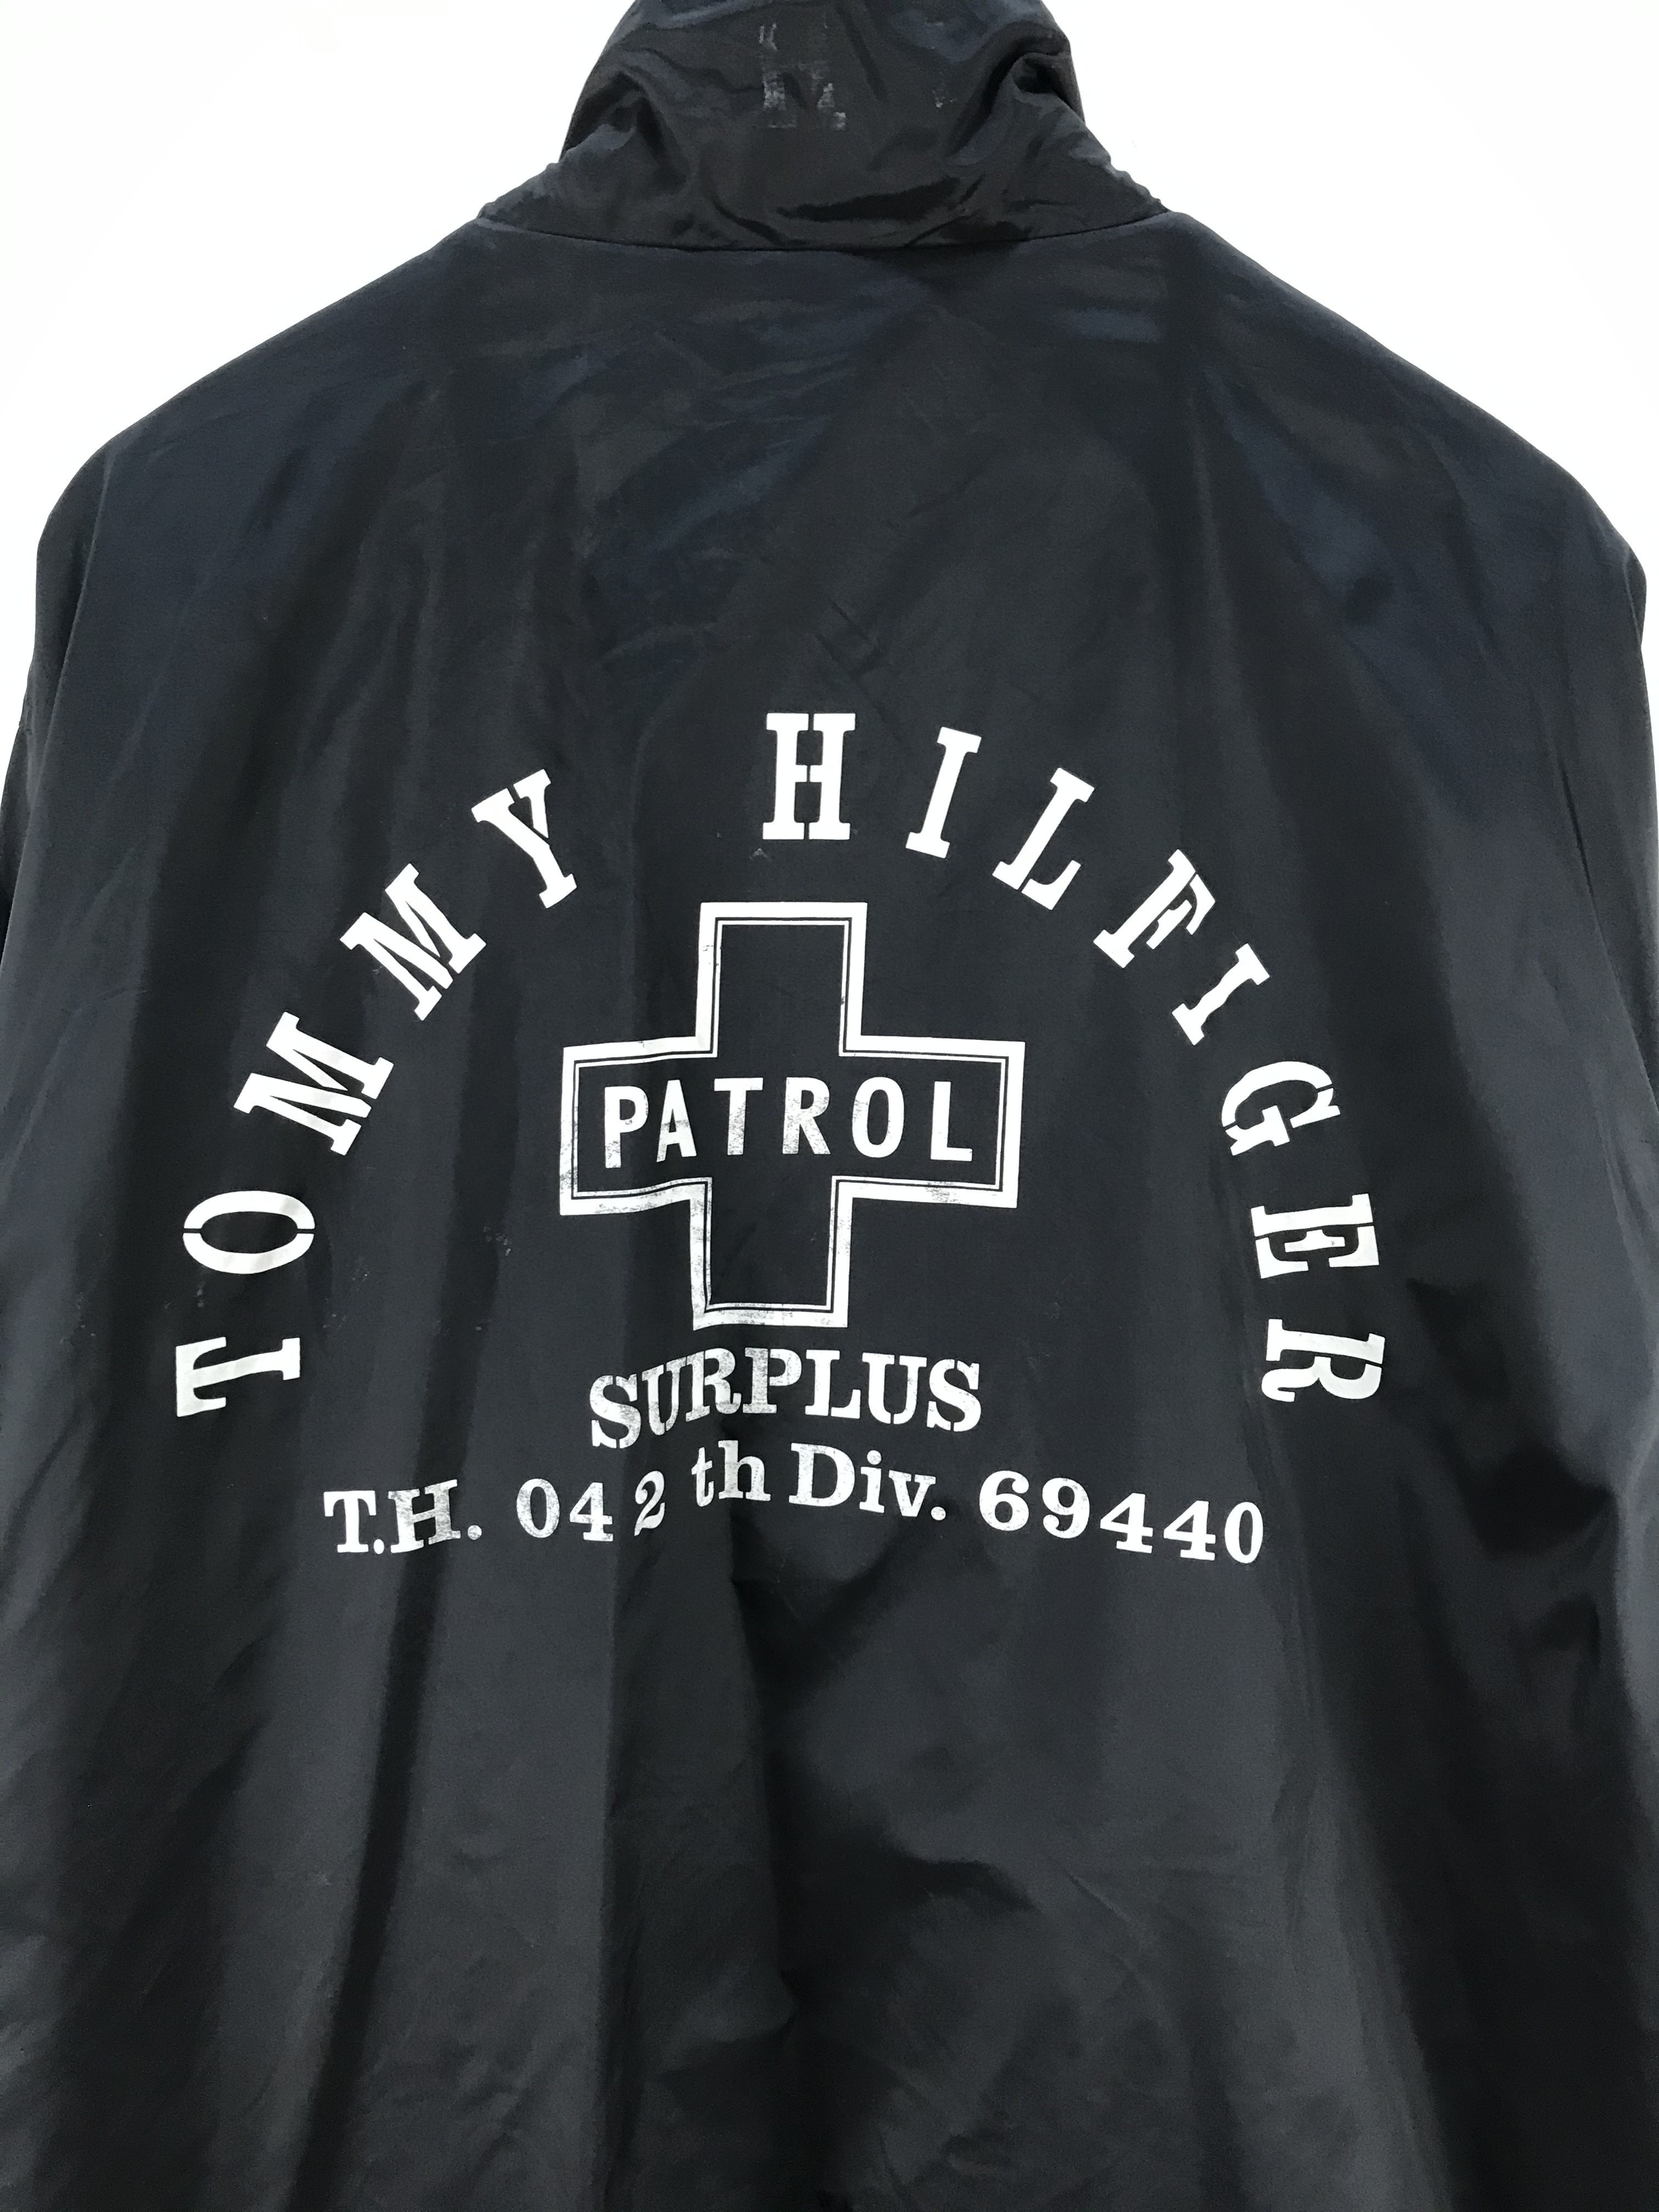 Tommy Hilfiger - Vintage Tommy Hilfiger Patrol Surplus Jacket